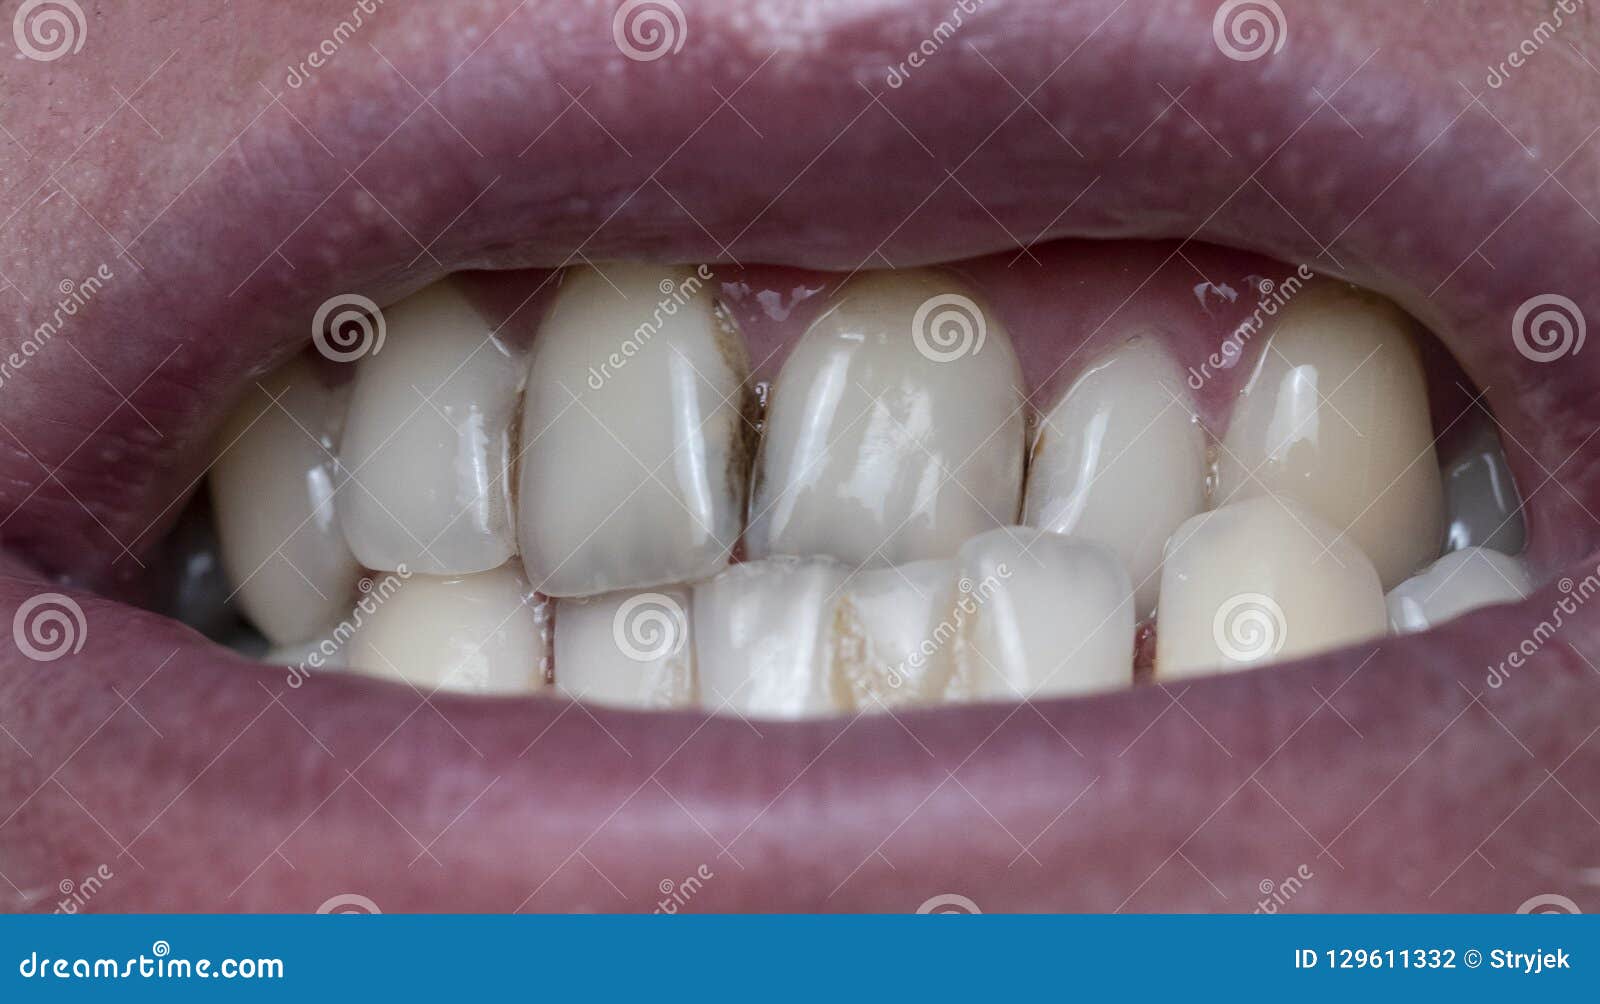 dental plaque on man`s teeth caused by coffee residual